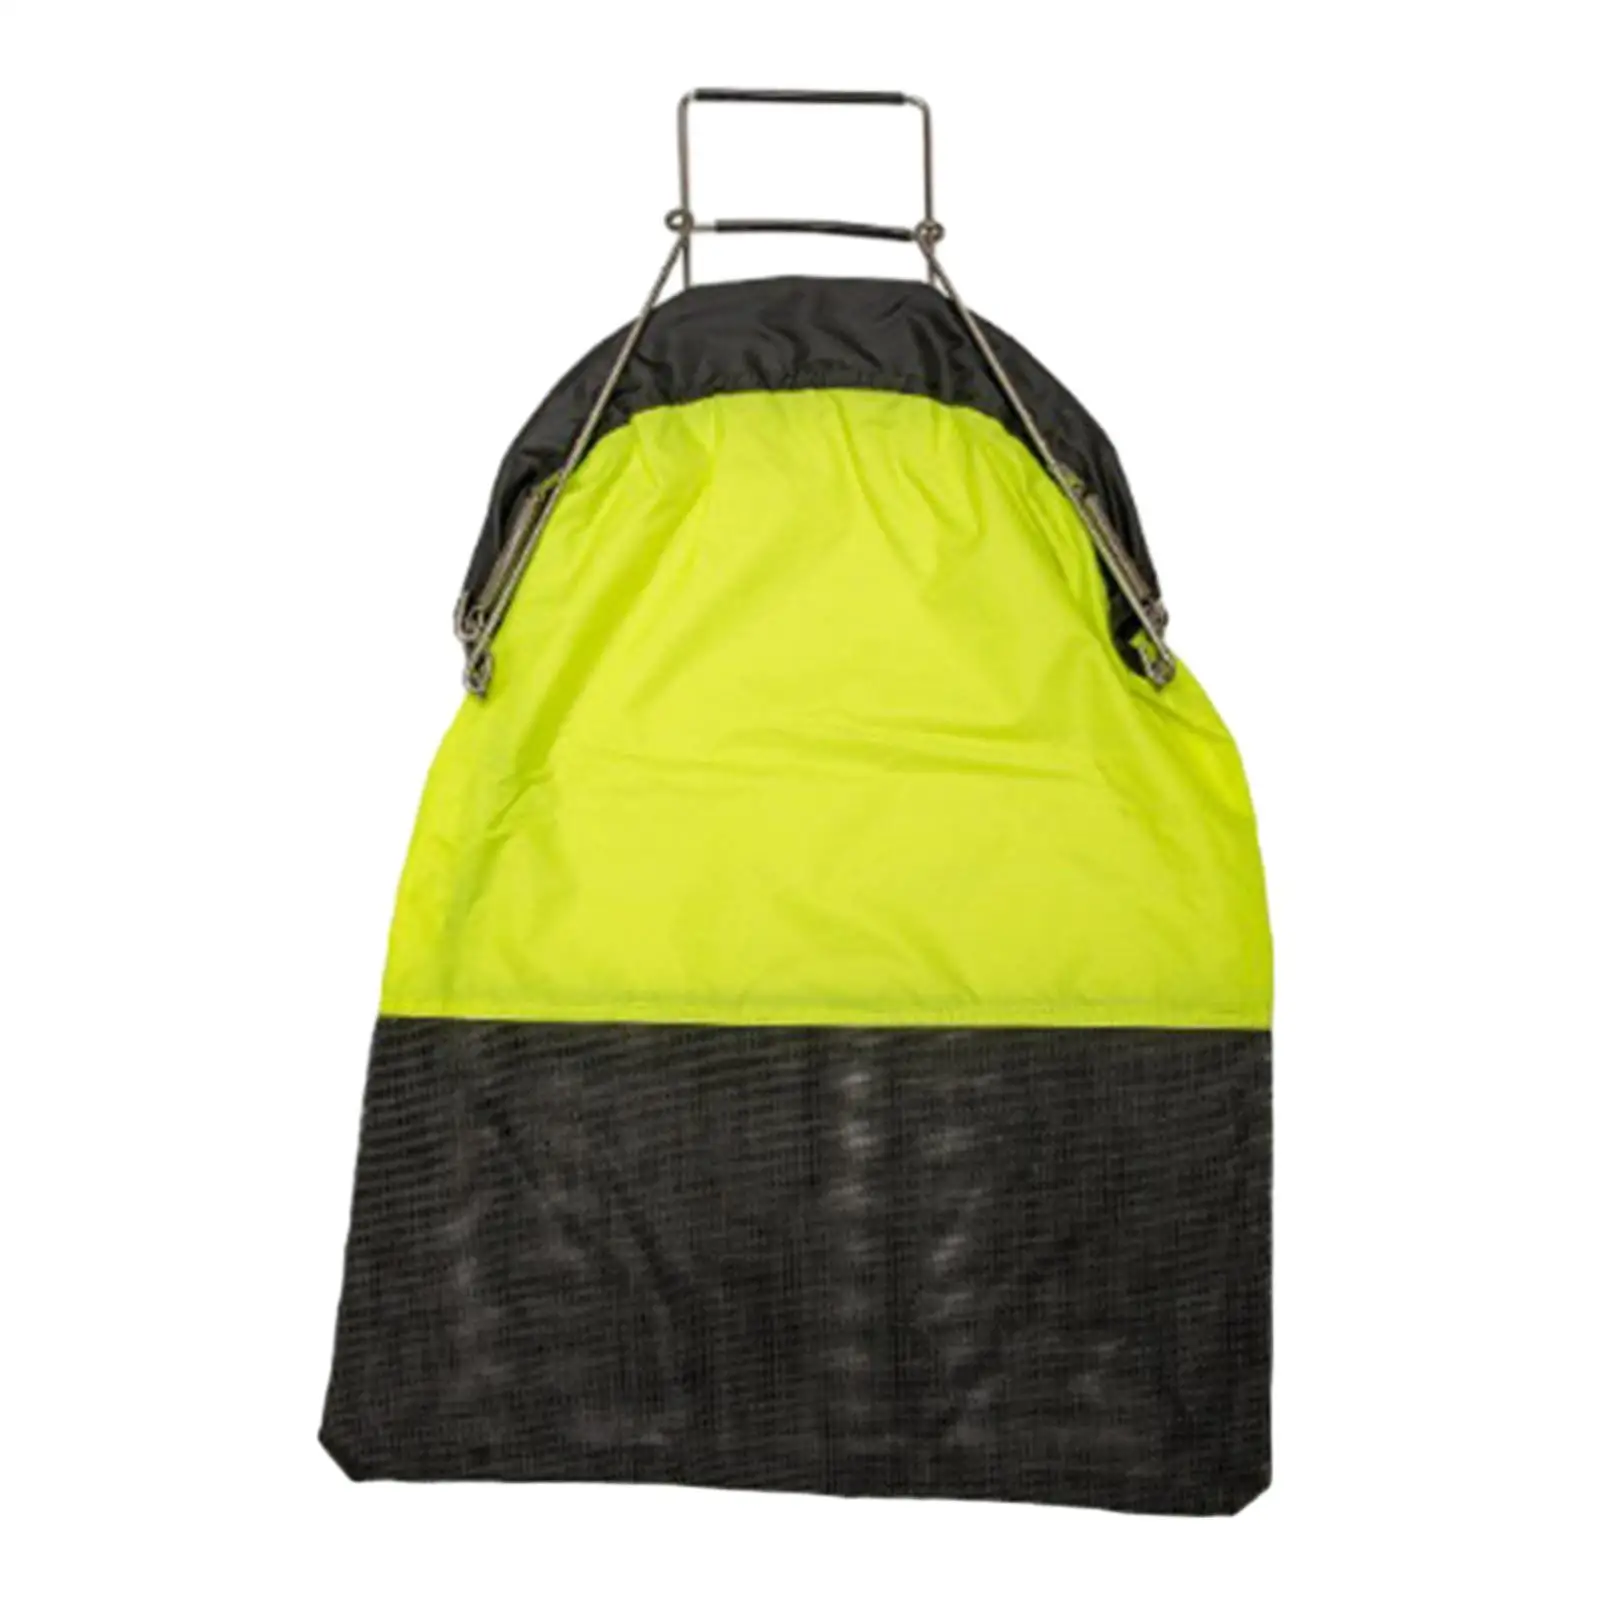 Heavy Duty Fish Kill Bag Portable Spring Closure Design Carry Handle Reusable Big Capacity Fish Cooler Bag for Travel Beach